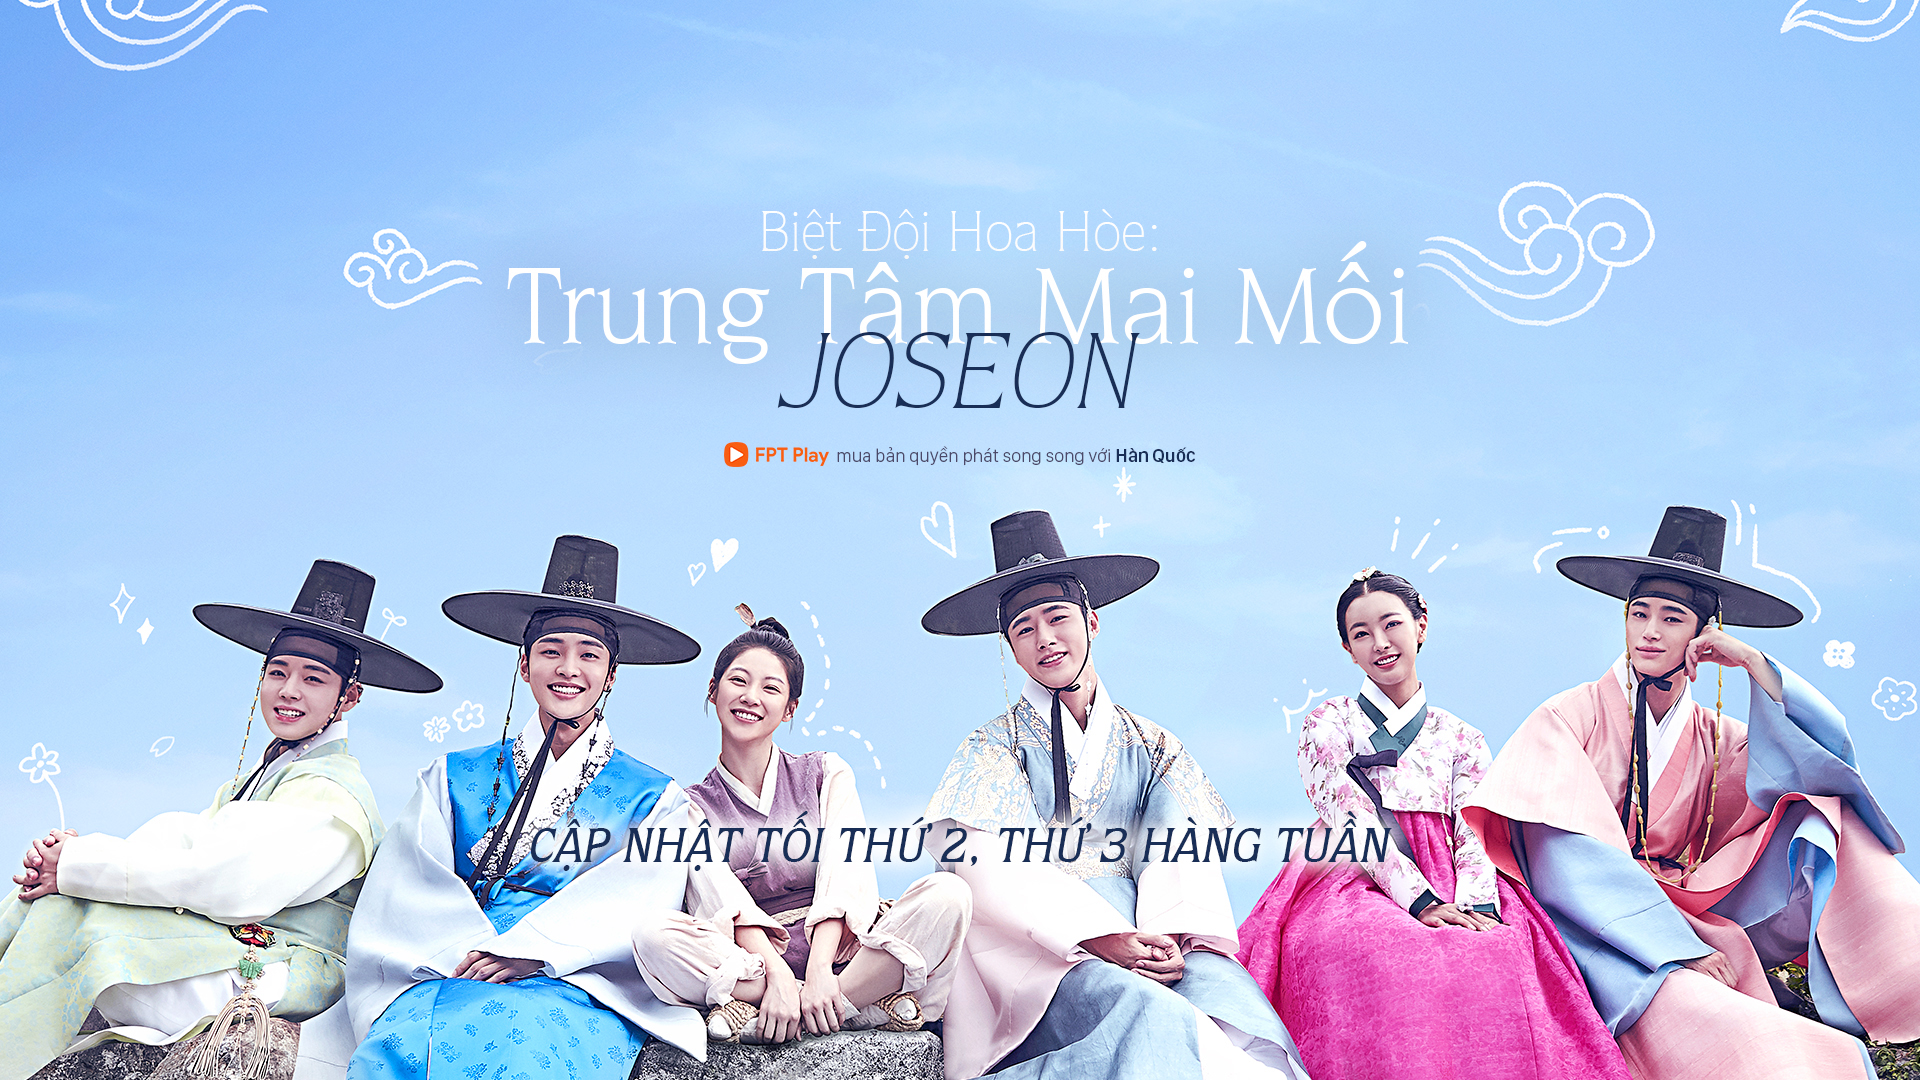 Biệt Đội Hoa Hòe: Trung Tâm Mai Mối Joseon-Flower Crew Joseon Marriage Agency